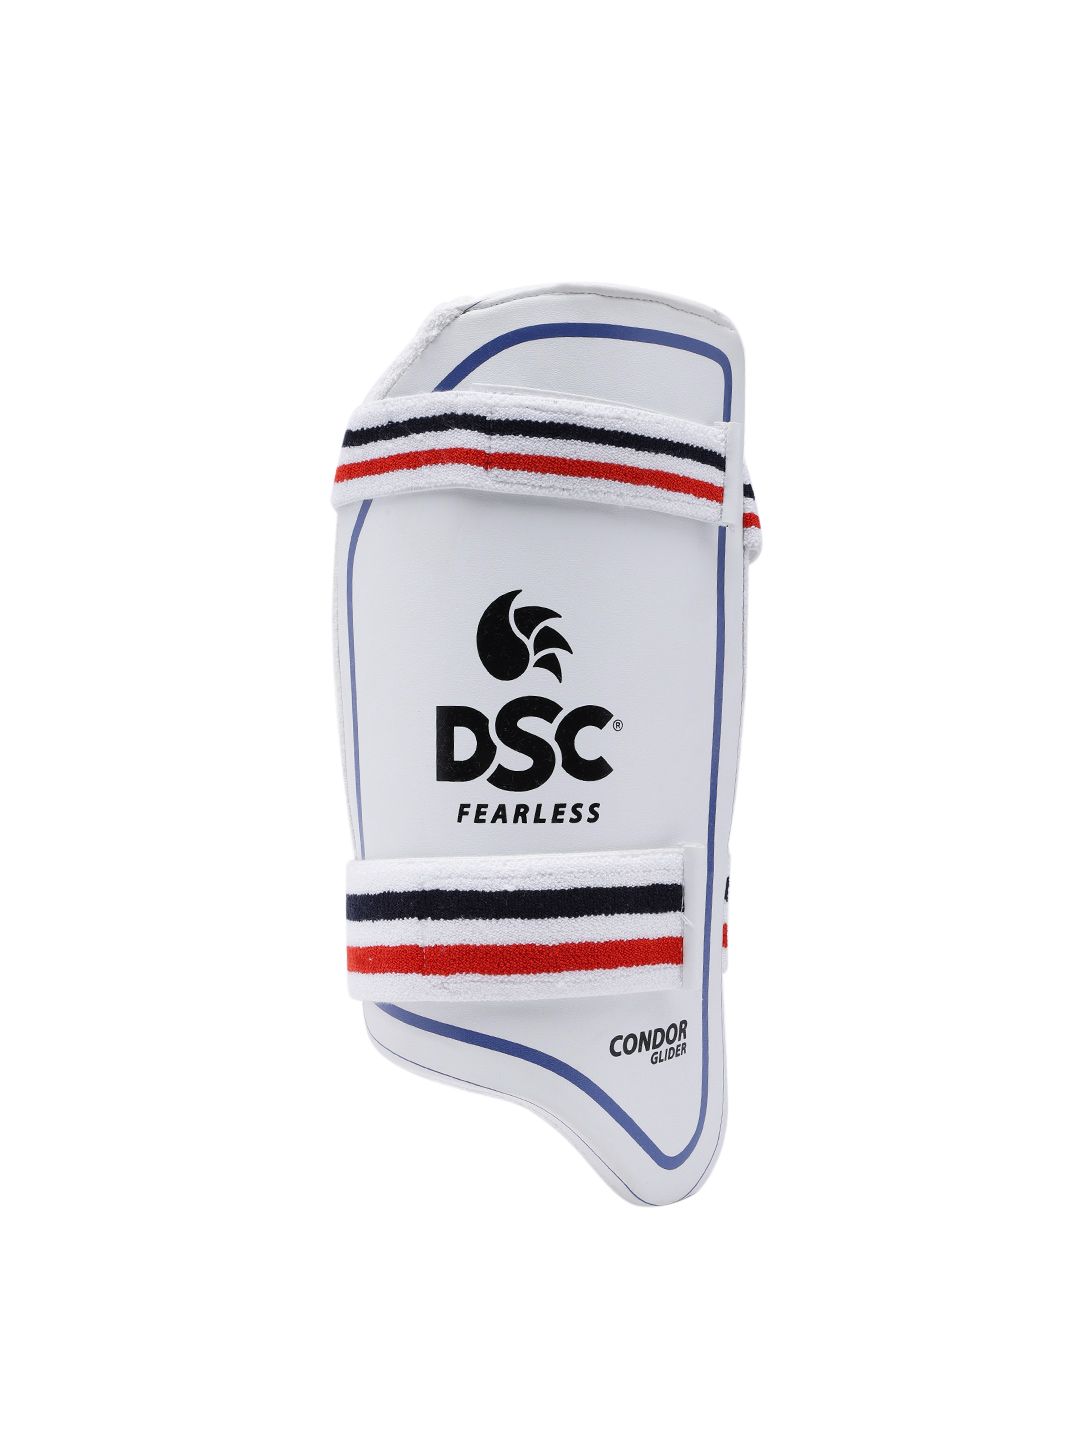 DSC Unisex White Brand Logo Printed Condor Glider Cricket Thigh Pad Price in India